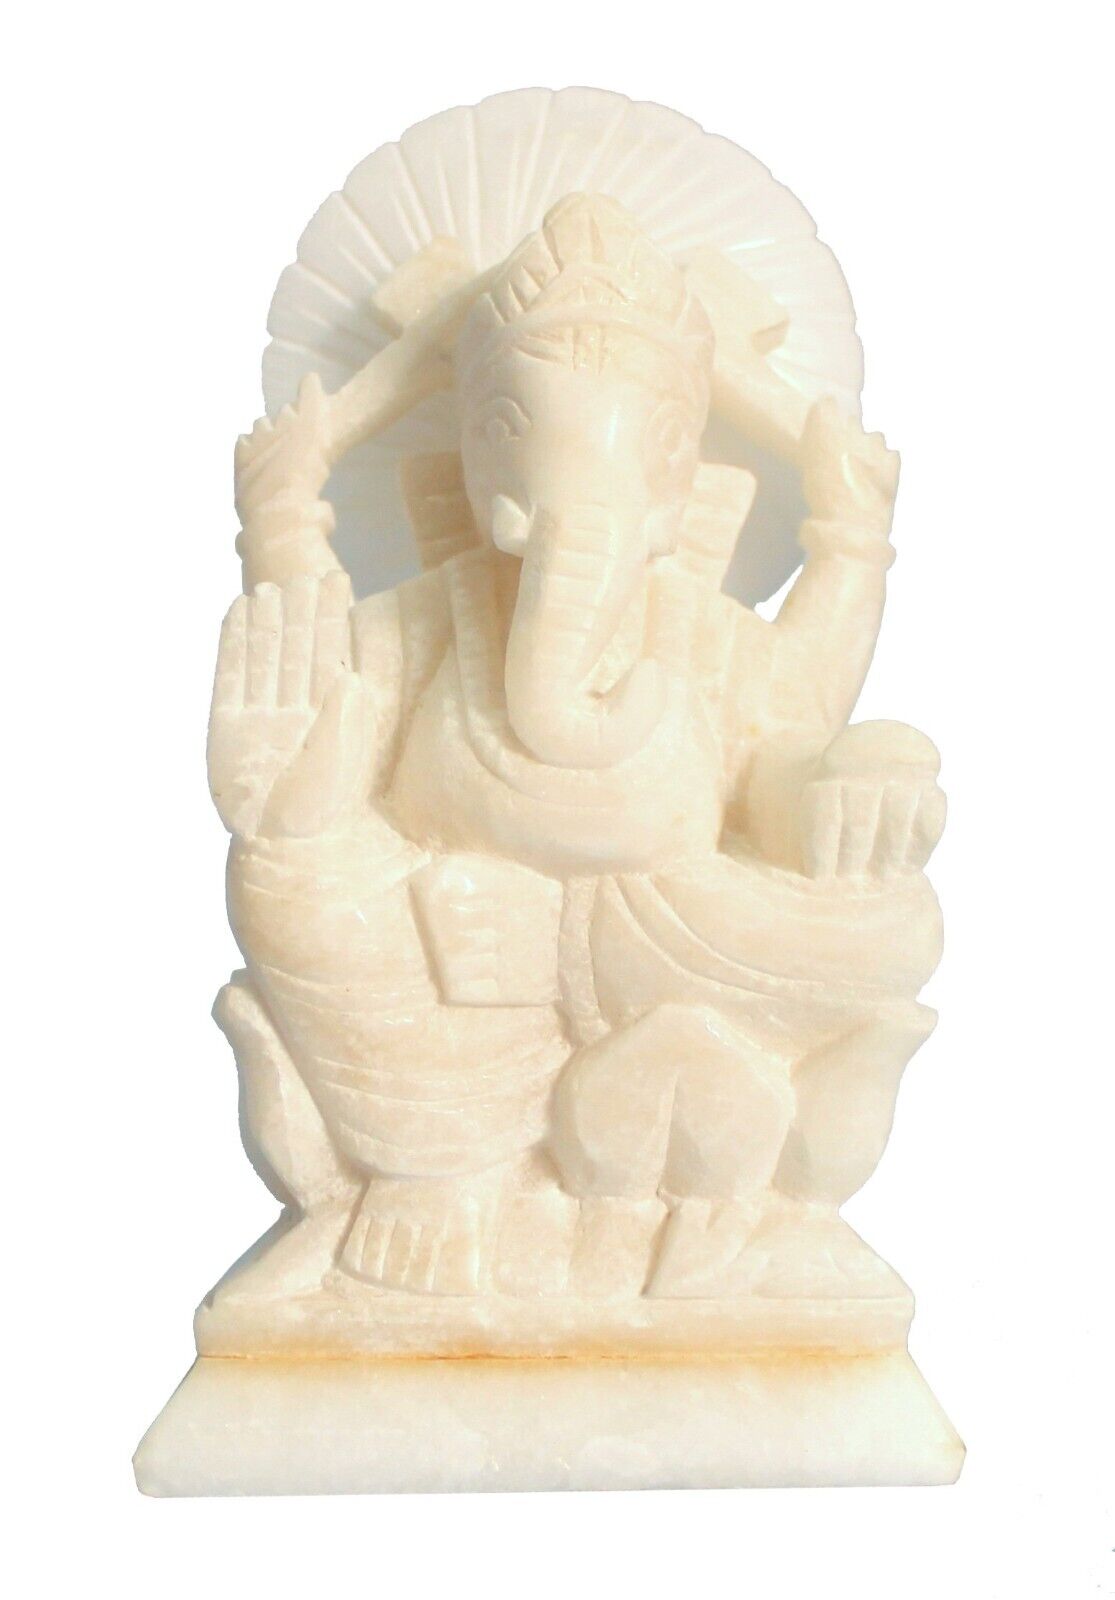 Decorative Marble Ganesha Murti Idol Statue Religious Gift Item, 7 Inches, White